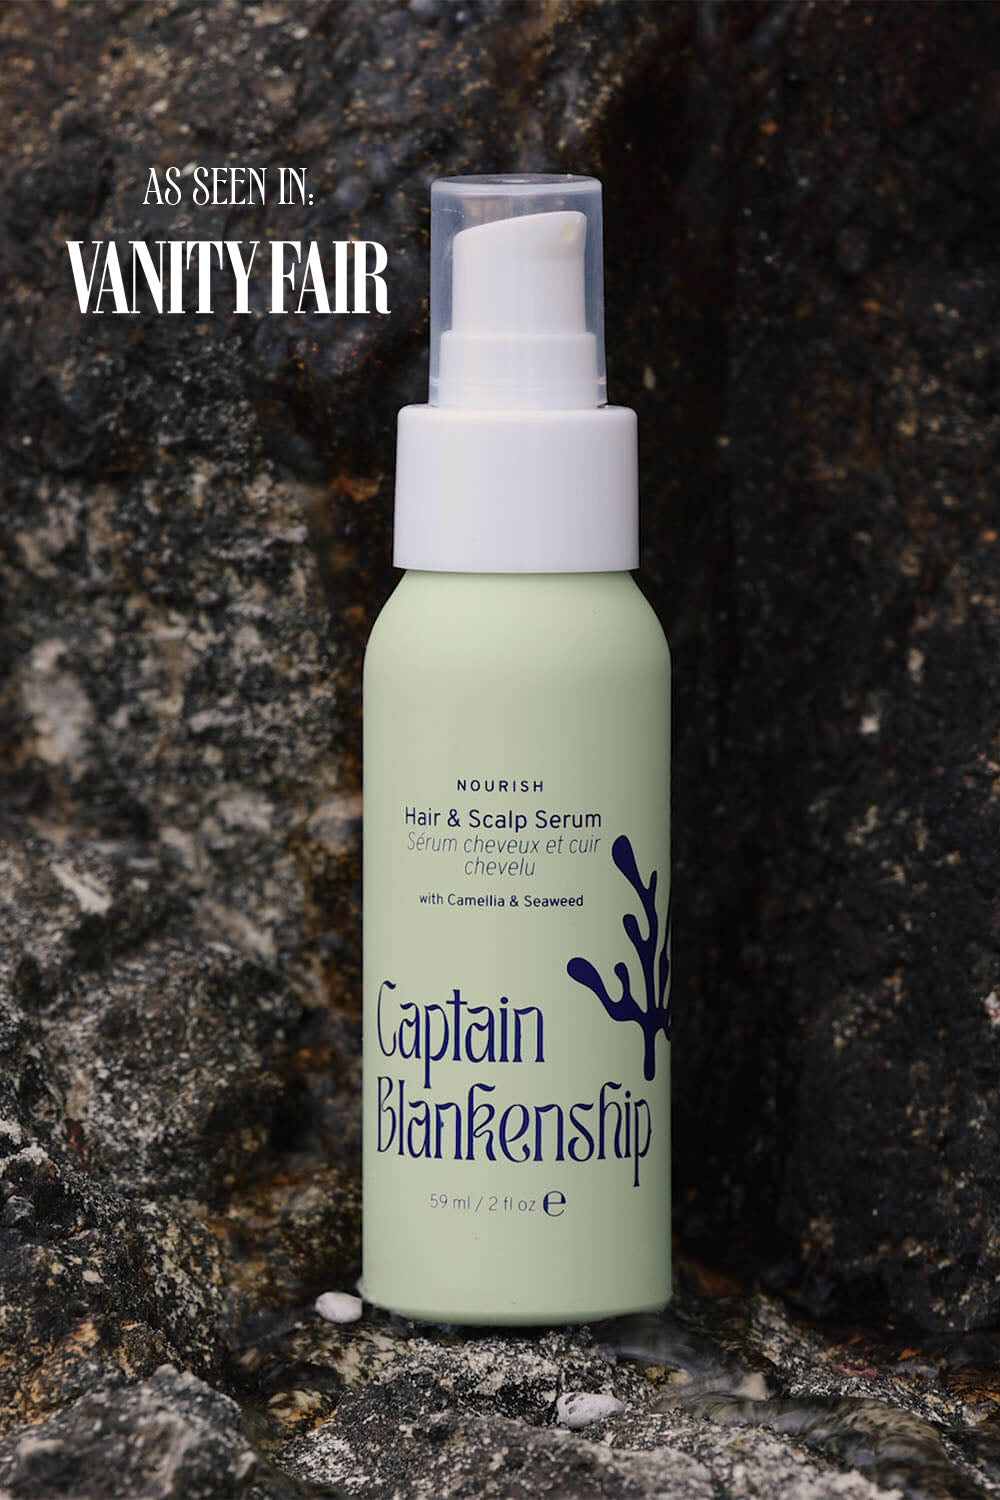 Vanity Fair favorite Captain Blankenship Hair & Scalp Serum